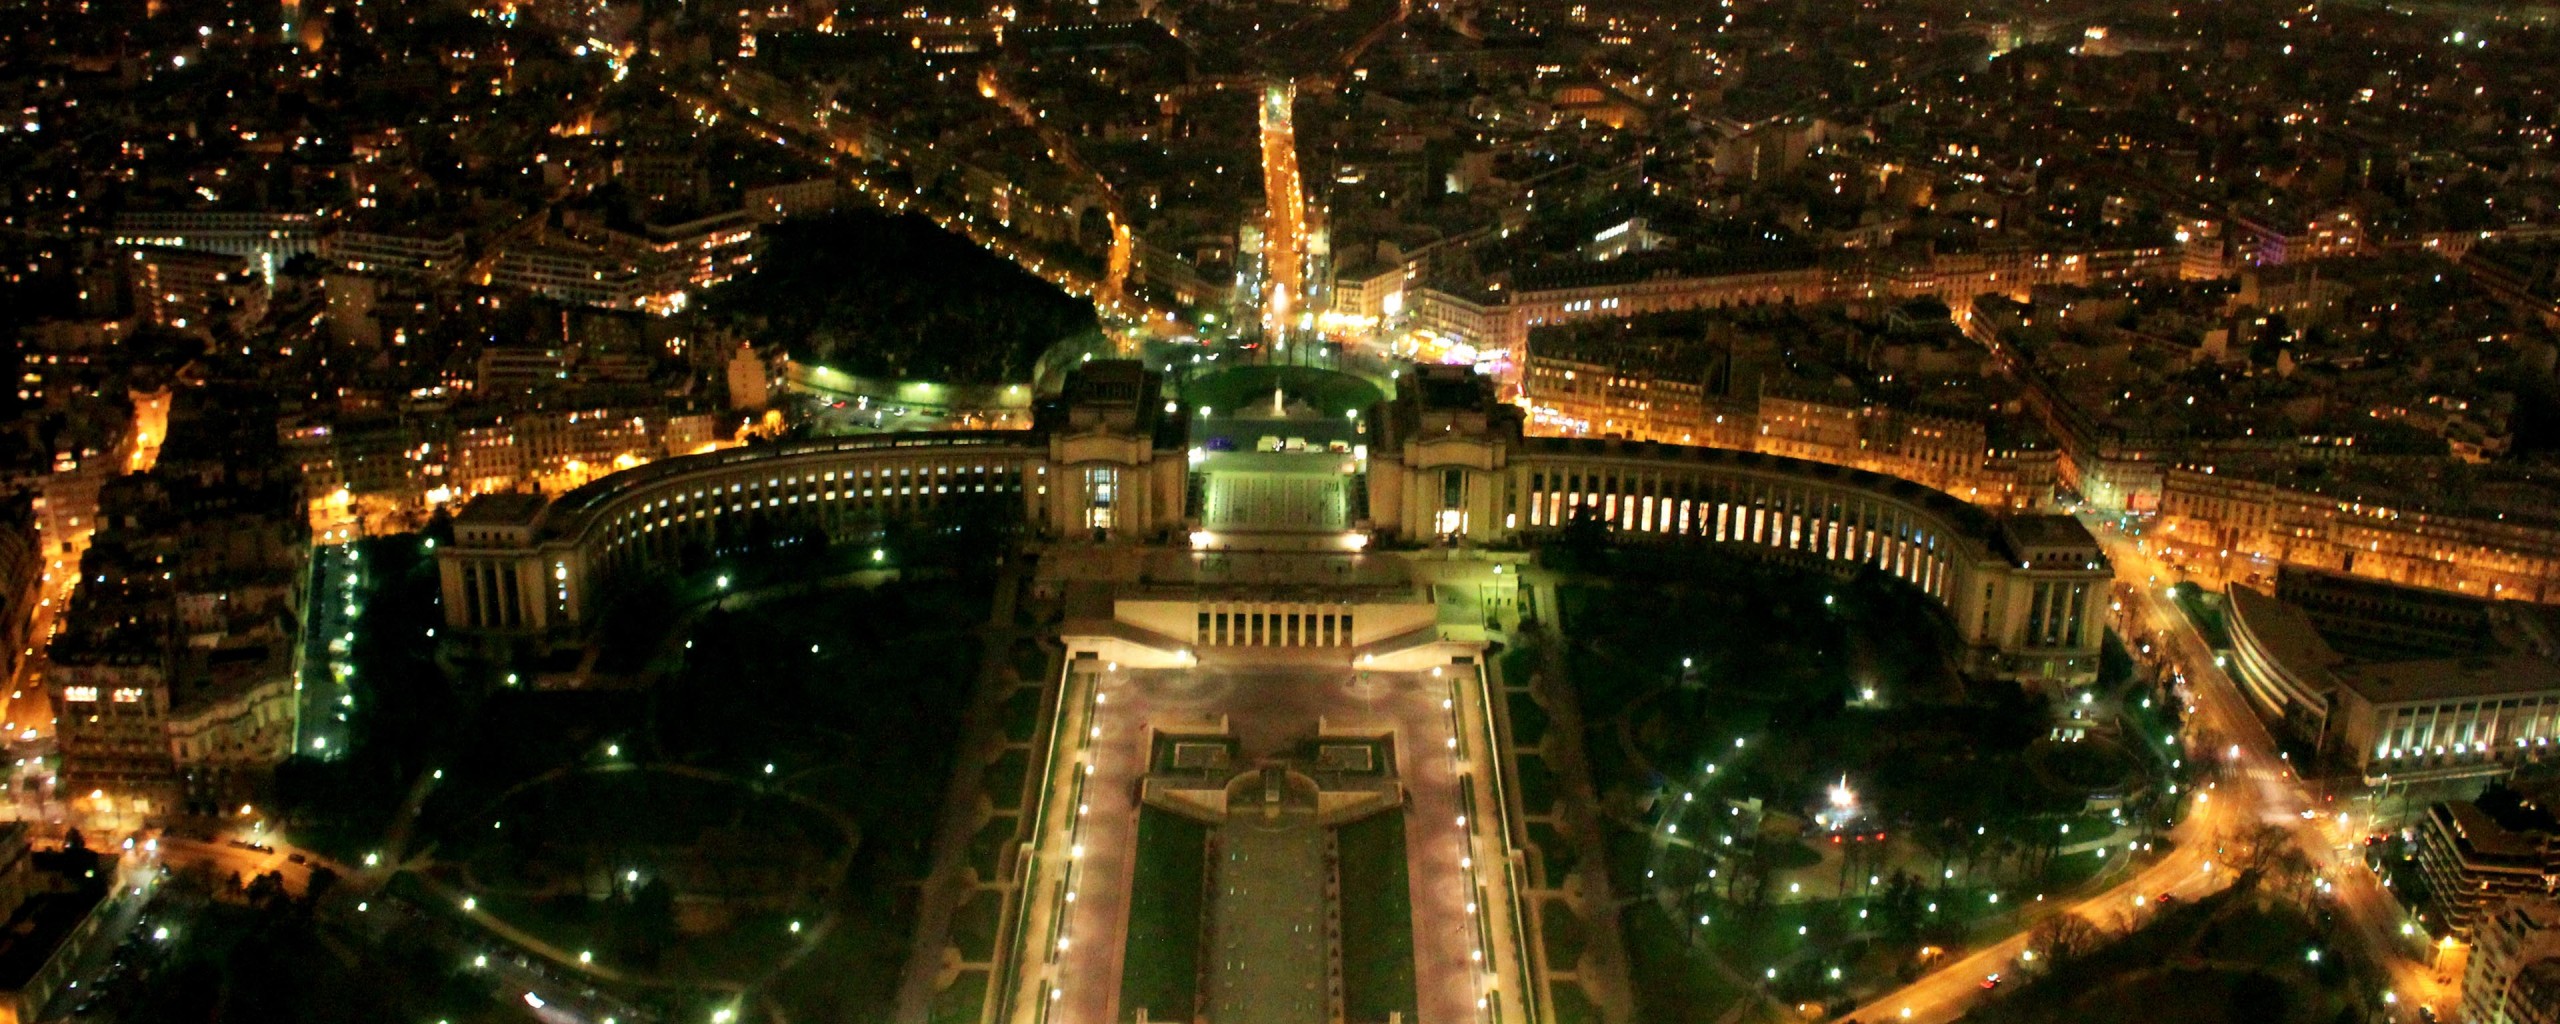 Paris night 2560x1024